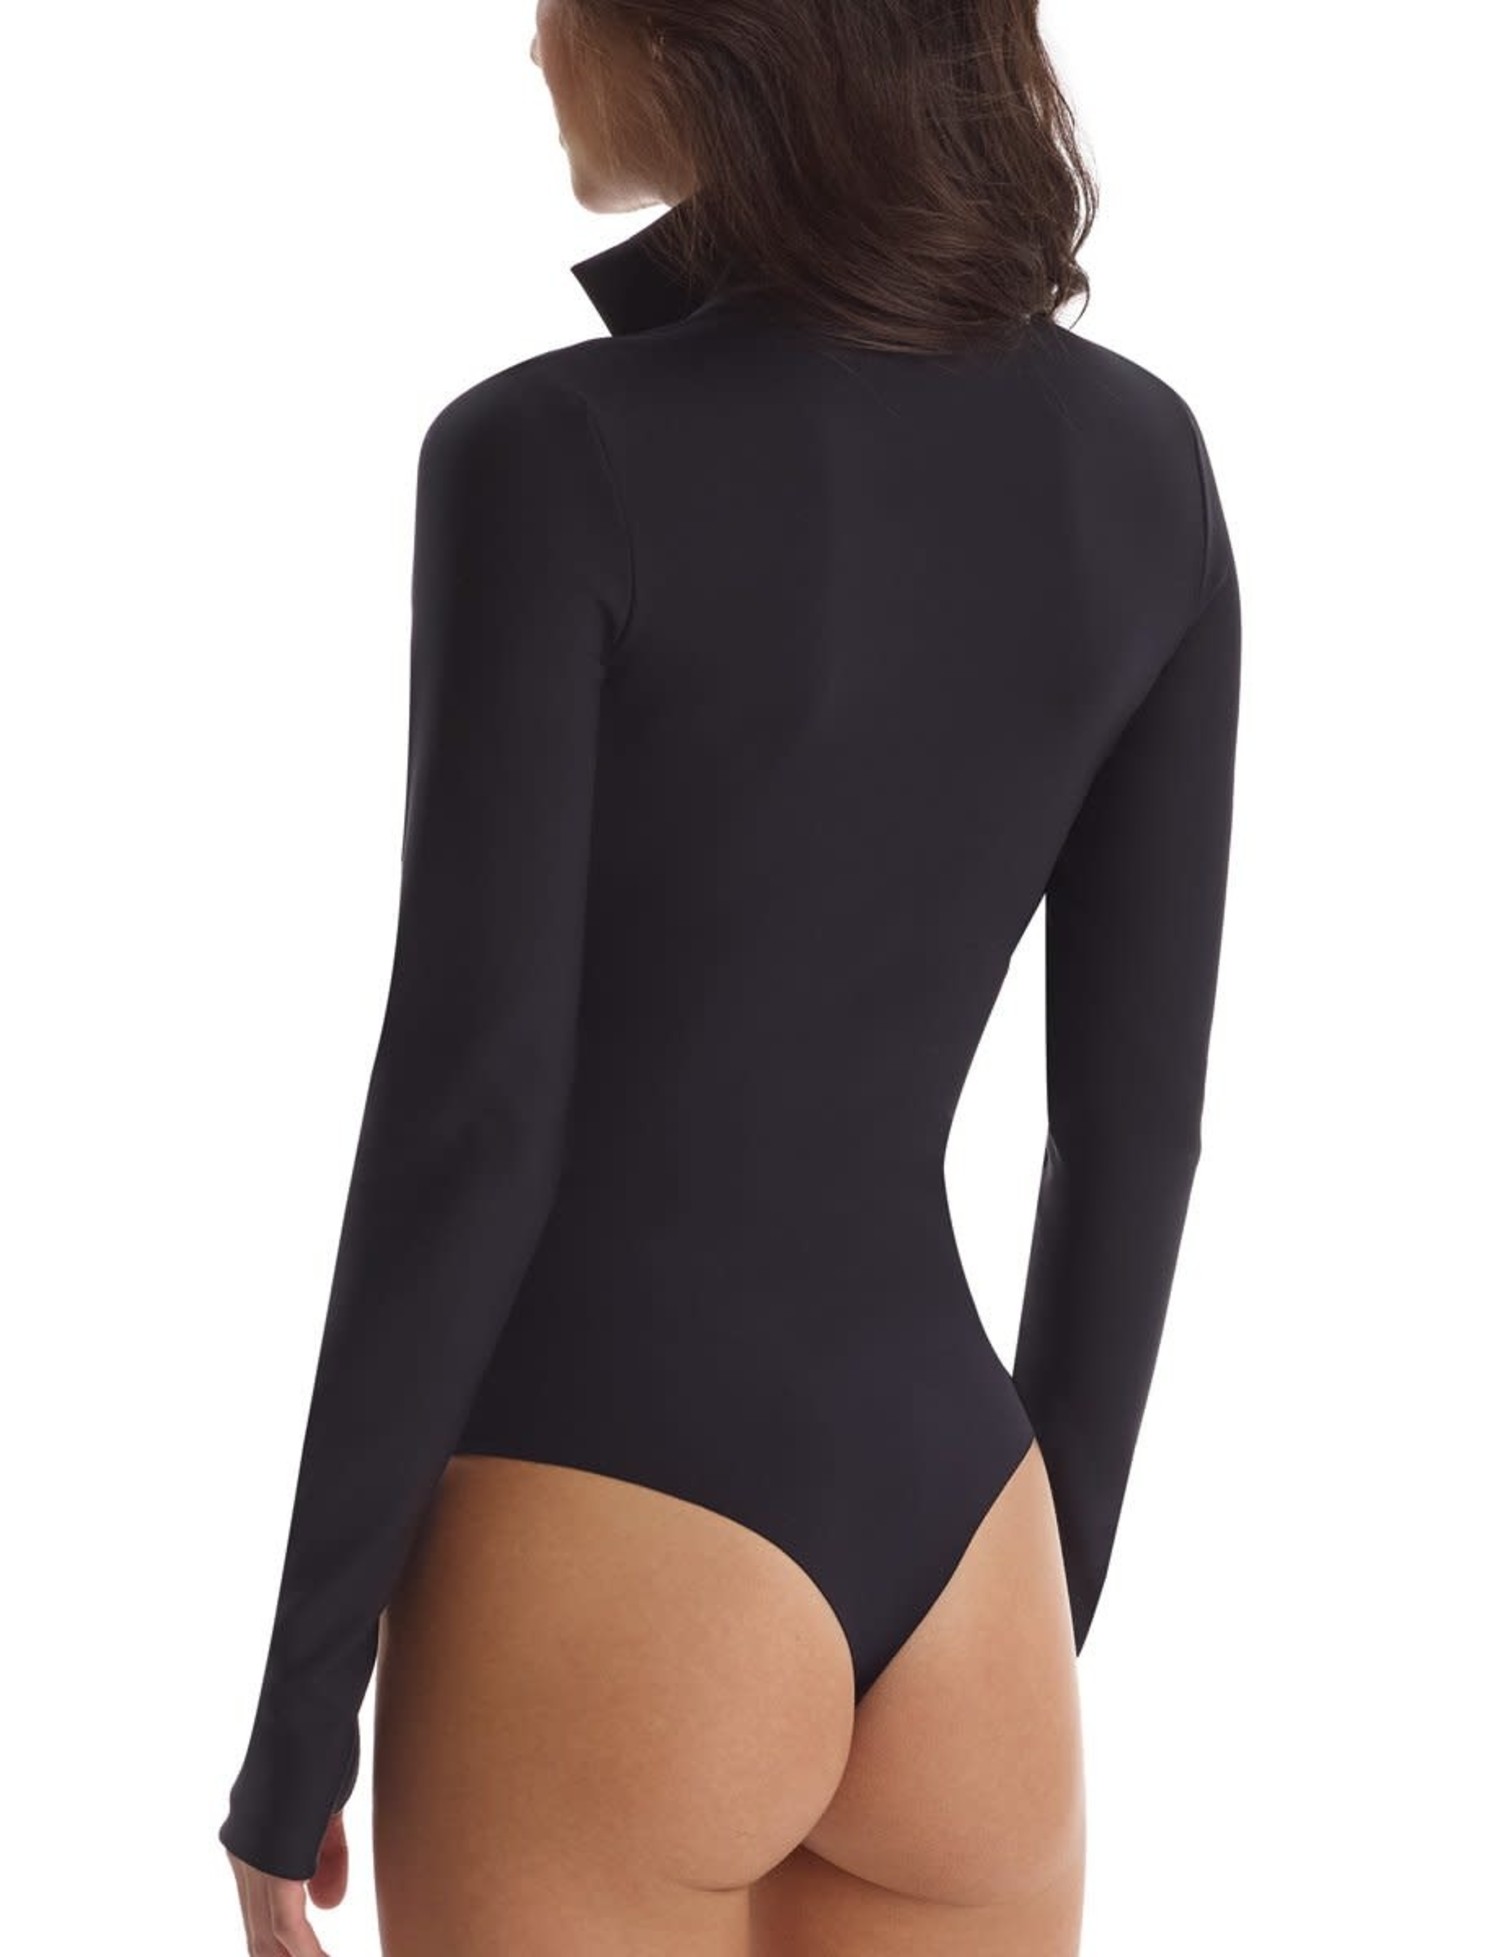 Sumtory Women's Black Bodysuit Long Sleeve 1/4 Zipper Front